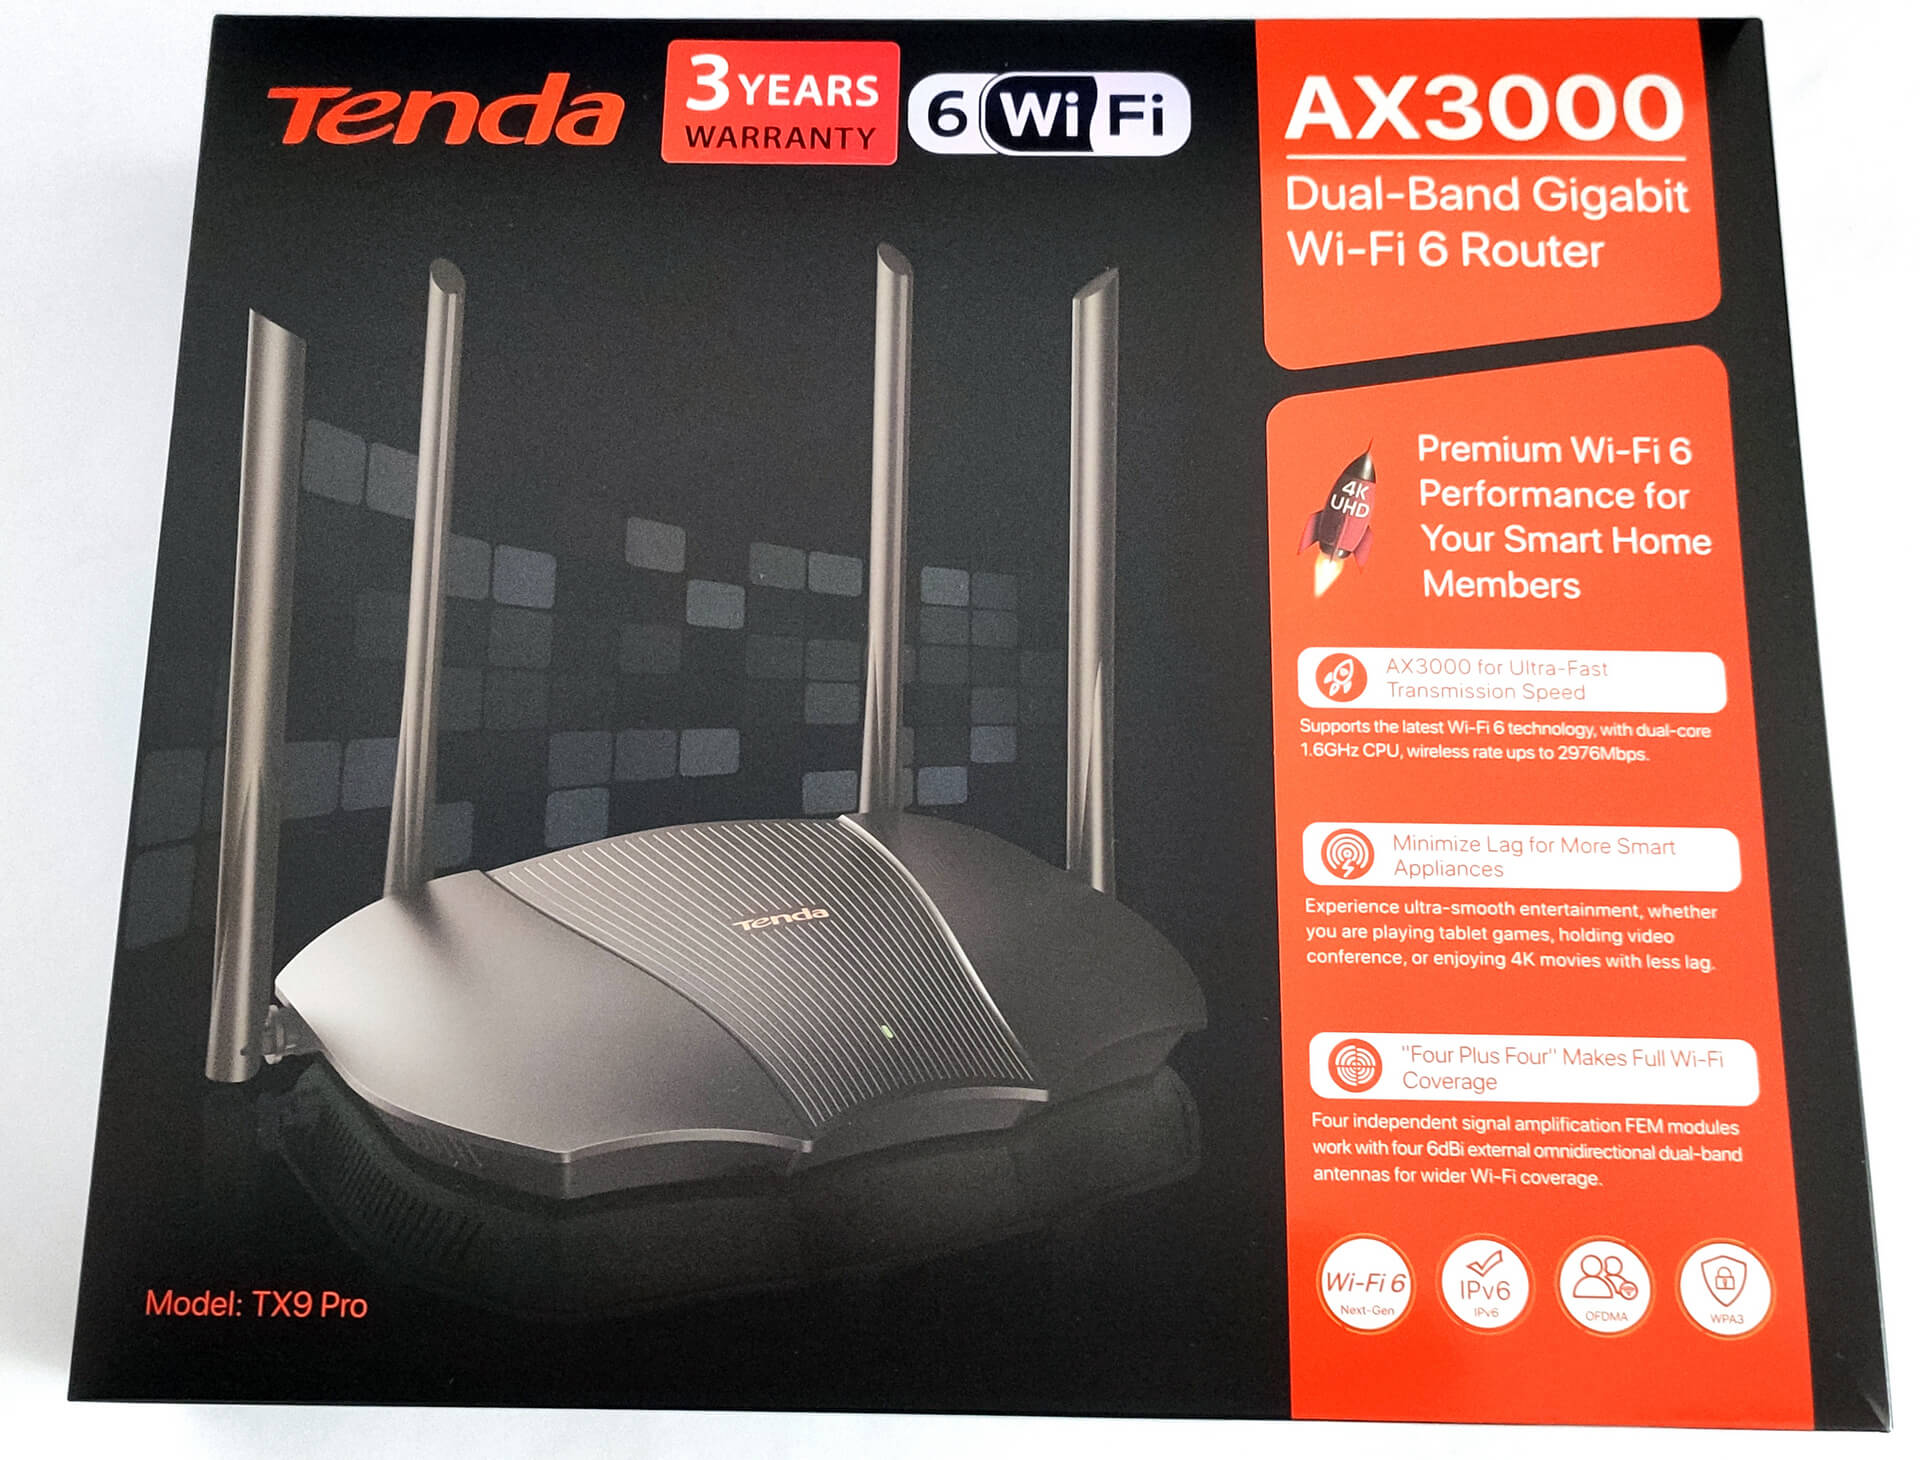 Tenda TX9 Pro AX3000 review